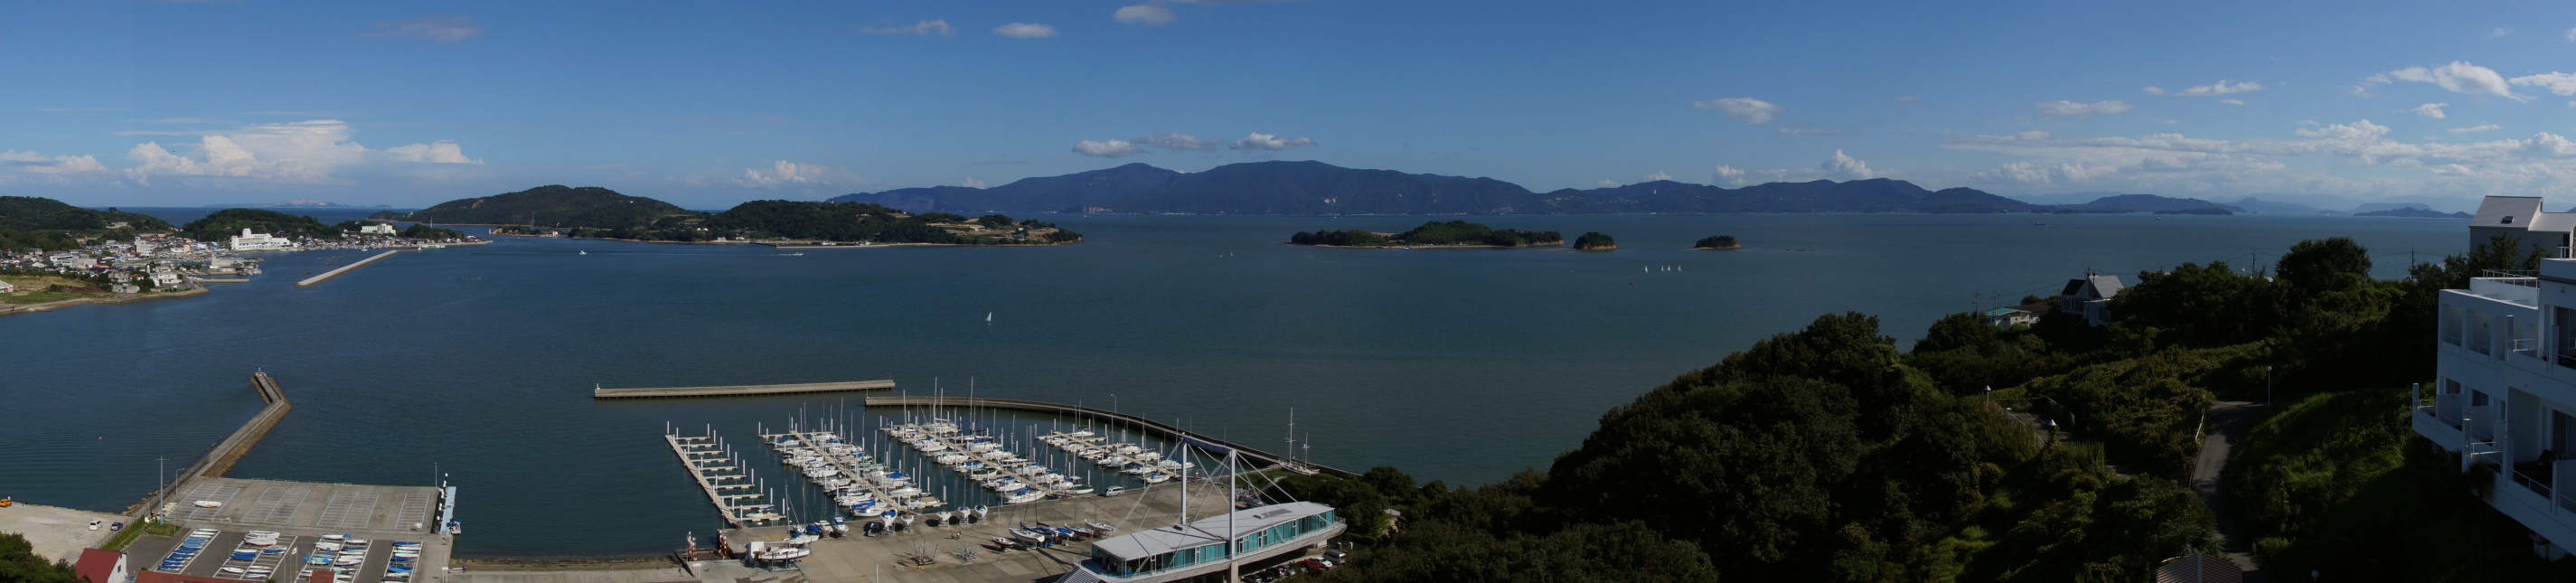 ushimado-town-panorama